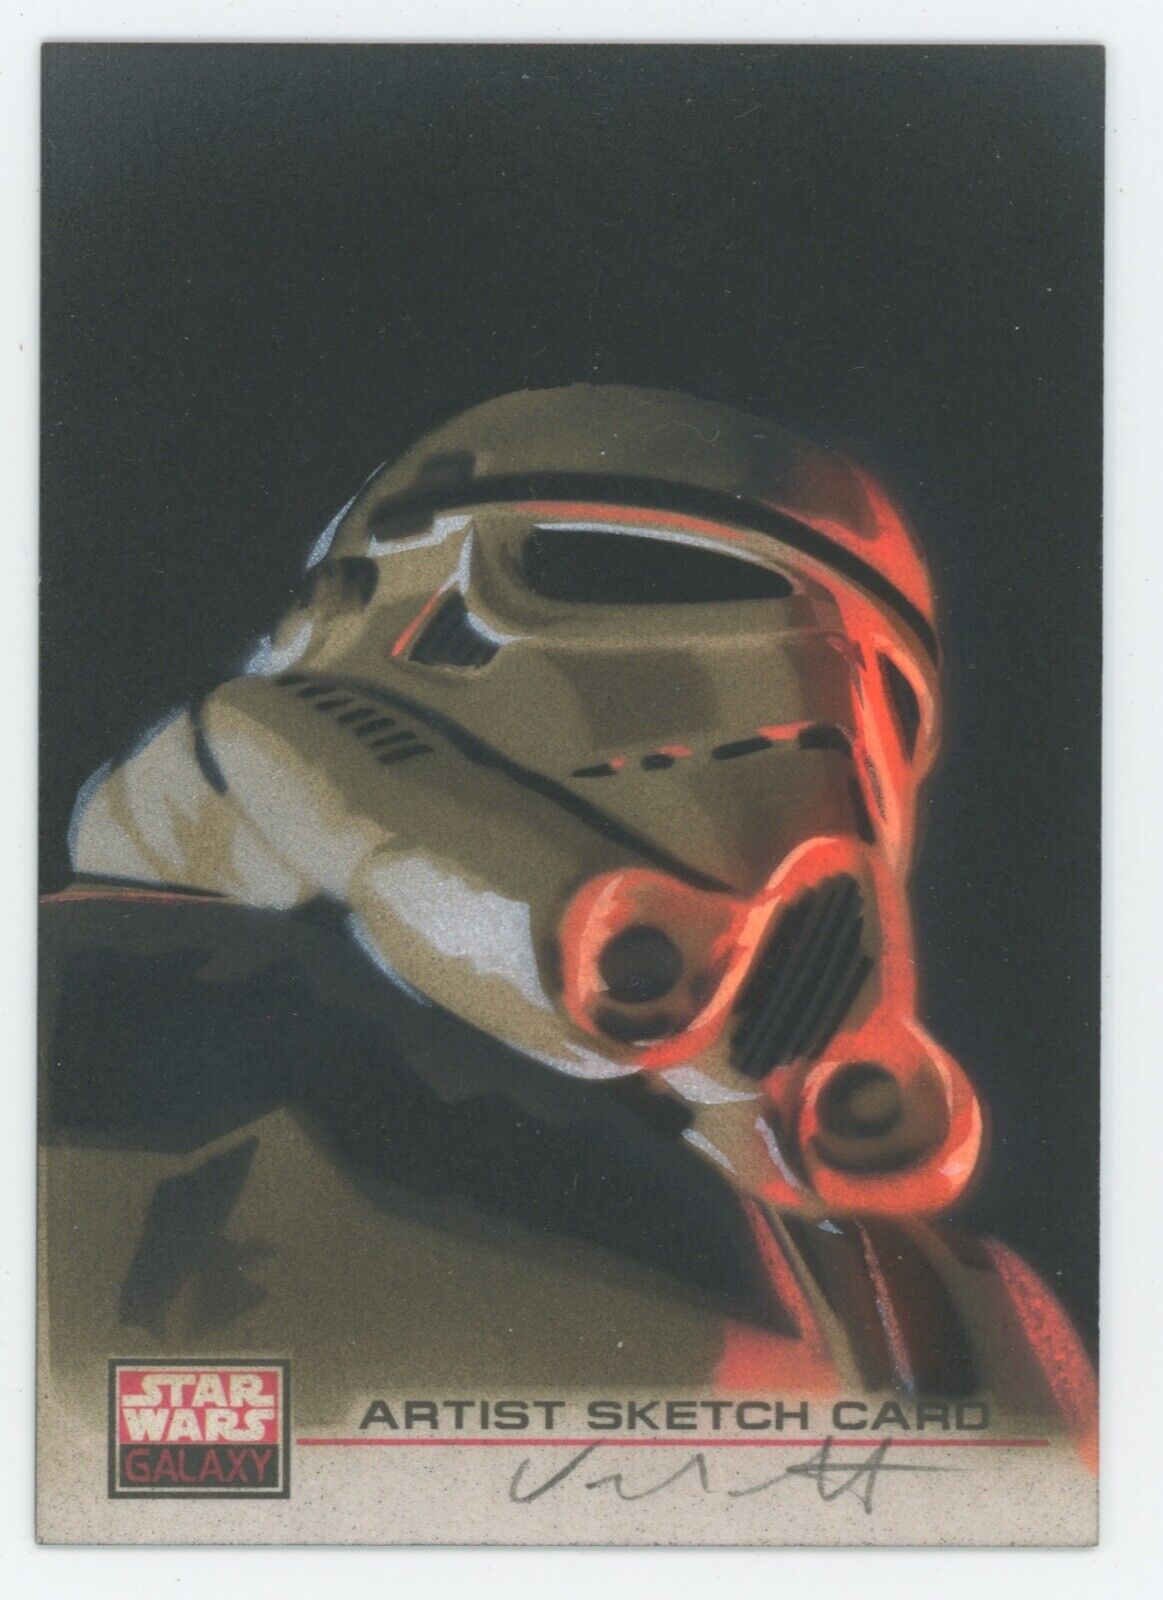 2008 Star Wars Galaxy 4 Artist Sketch Card Stormtrooper by Jerry Vanderstelt